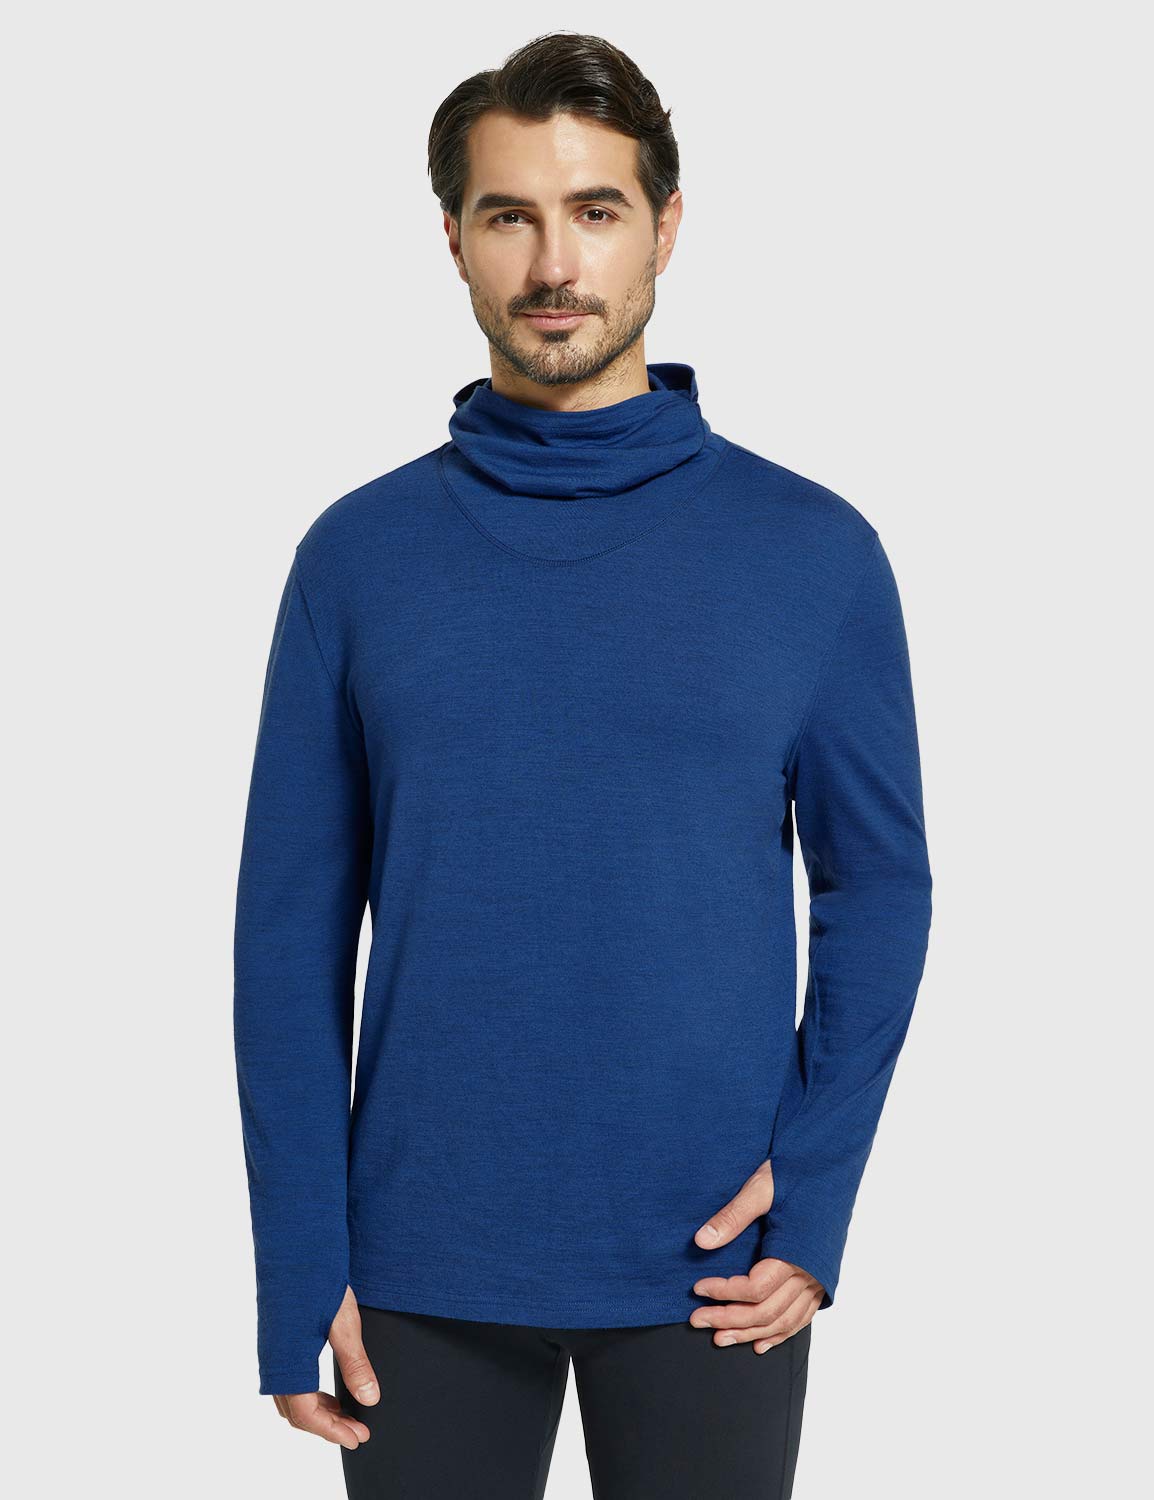 Baleaf Men's Merino Wool Hooded Base Layer Shirts Quartz blue Main